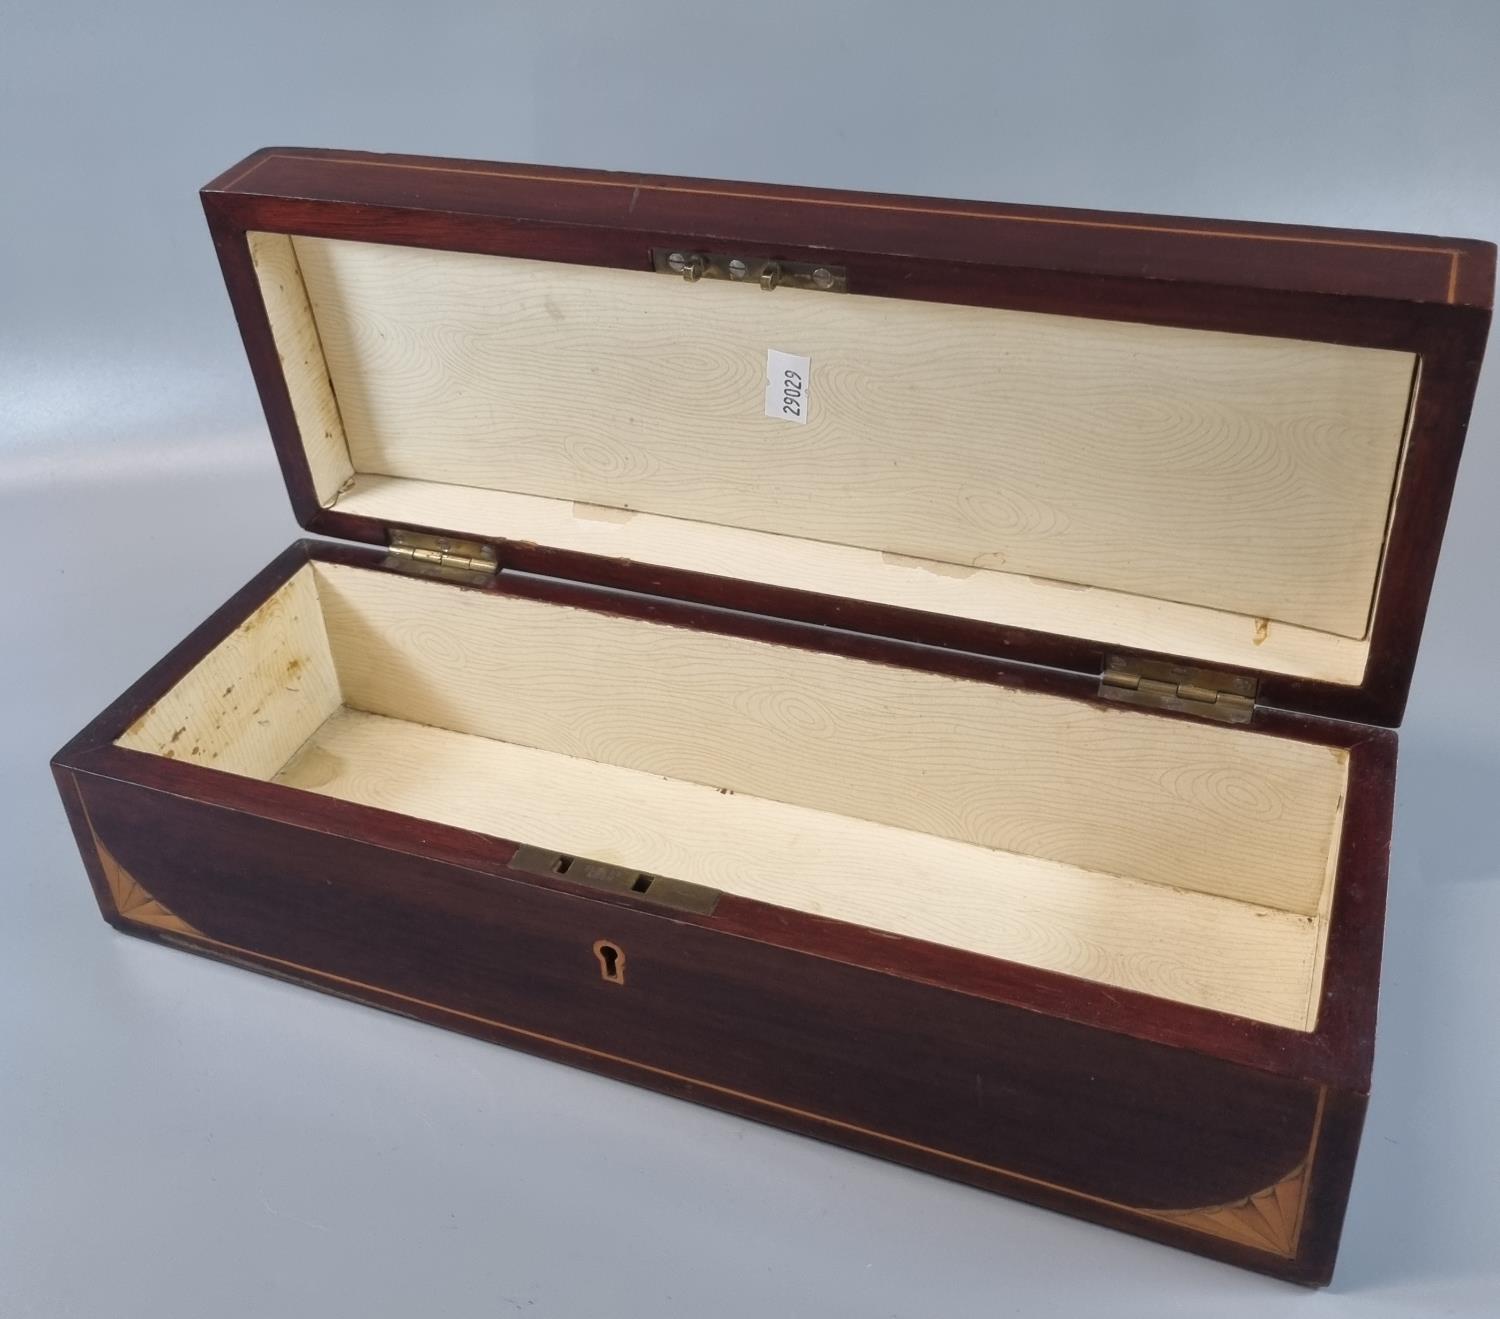 Edwardian mahogany inlaid and cross banded glove box. (B.P. 21% + VAT) - Image 2 of 2